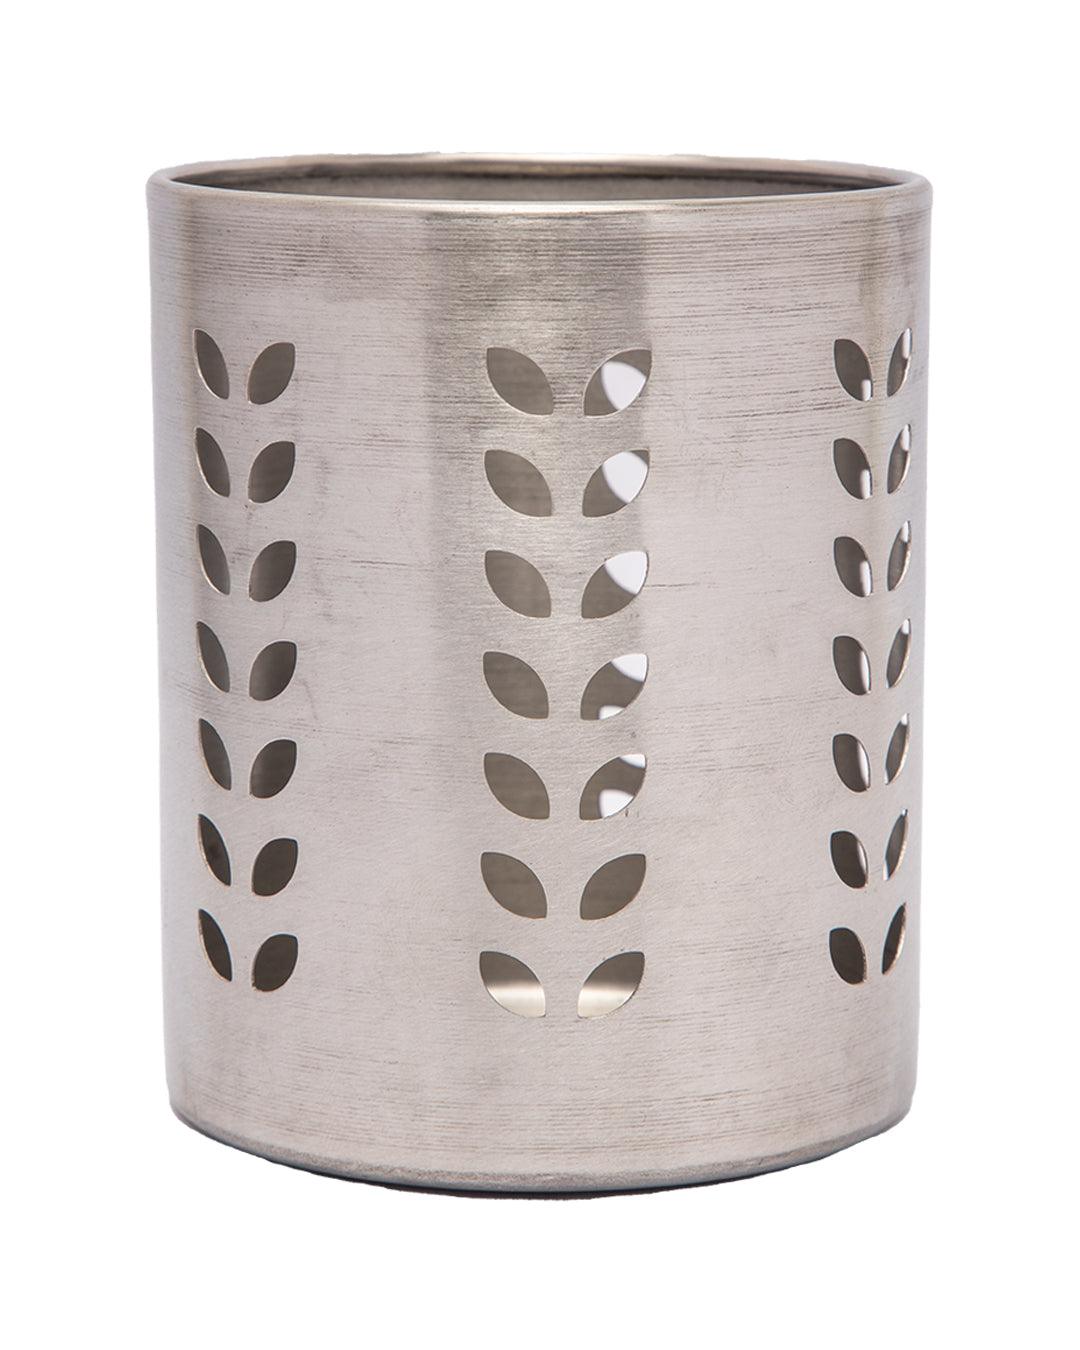 Cutlery Holder, Leaf Punch Design, Silver, Stainless Steel, Set of 2 - MARKET 99